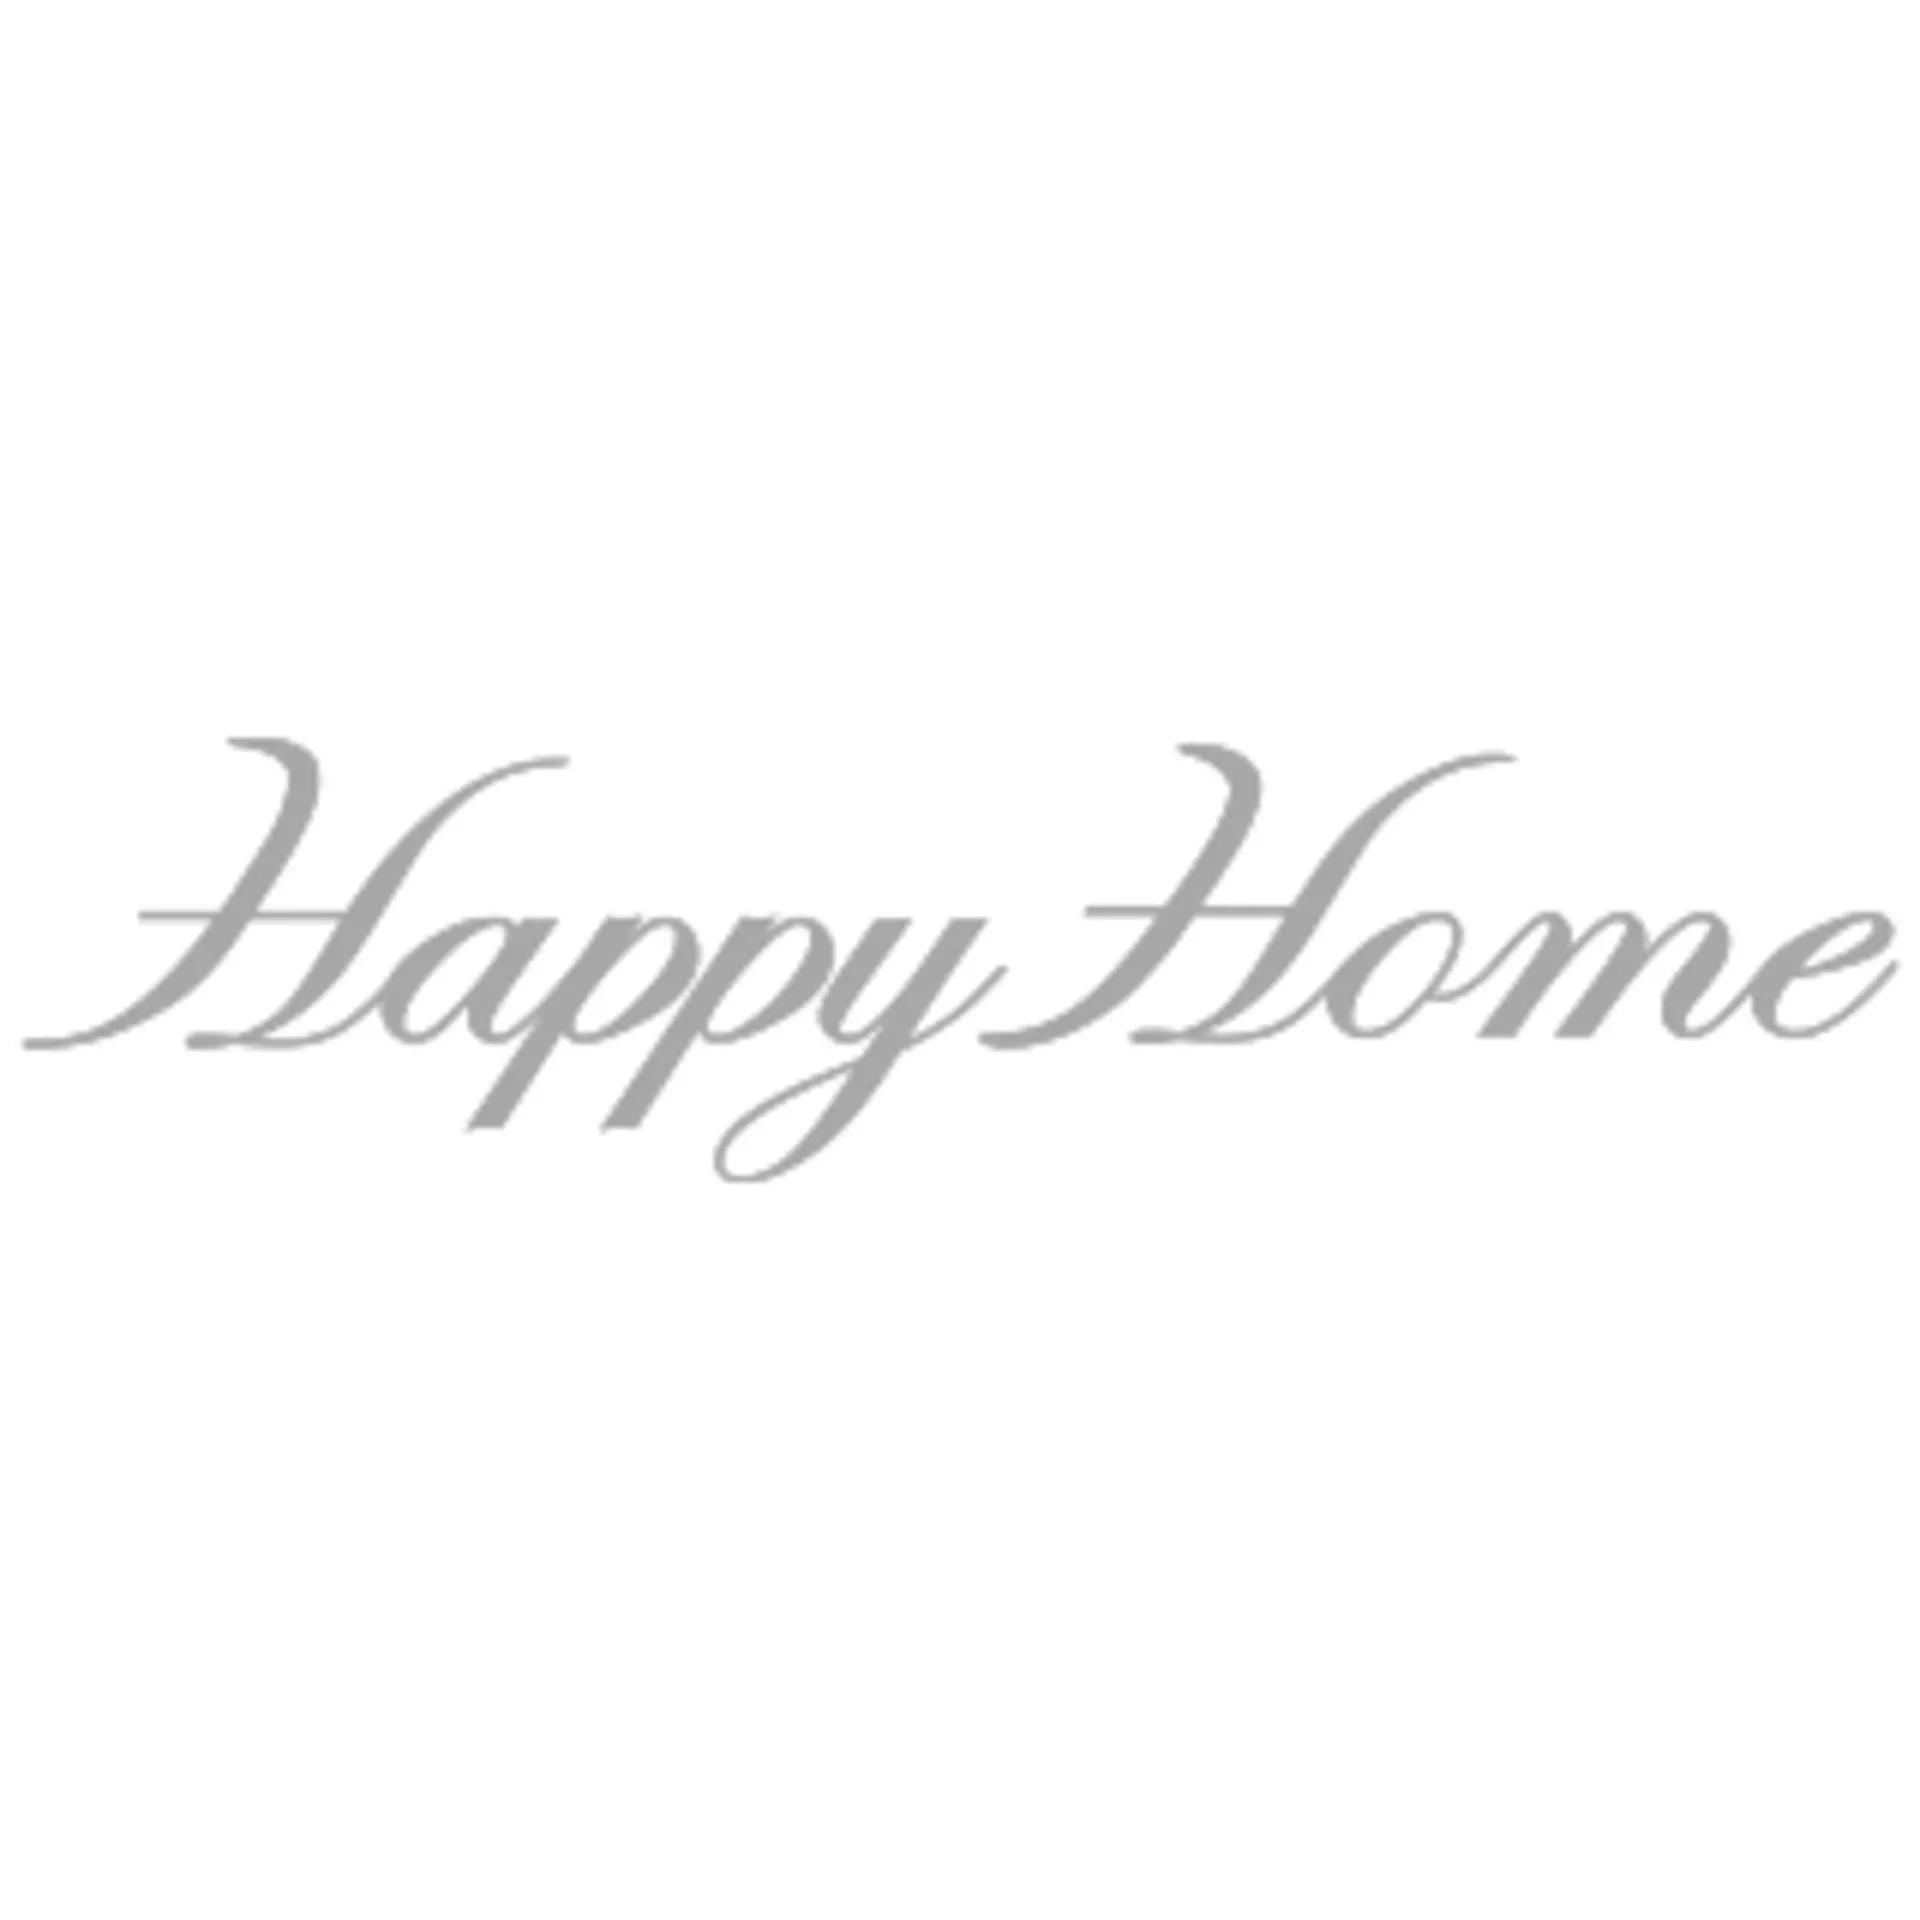 Logo Happy Home